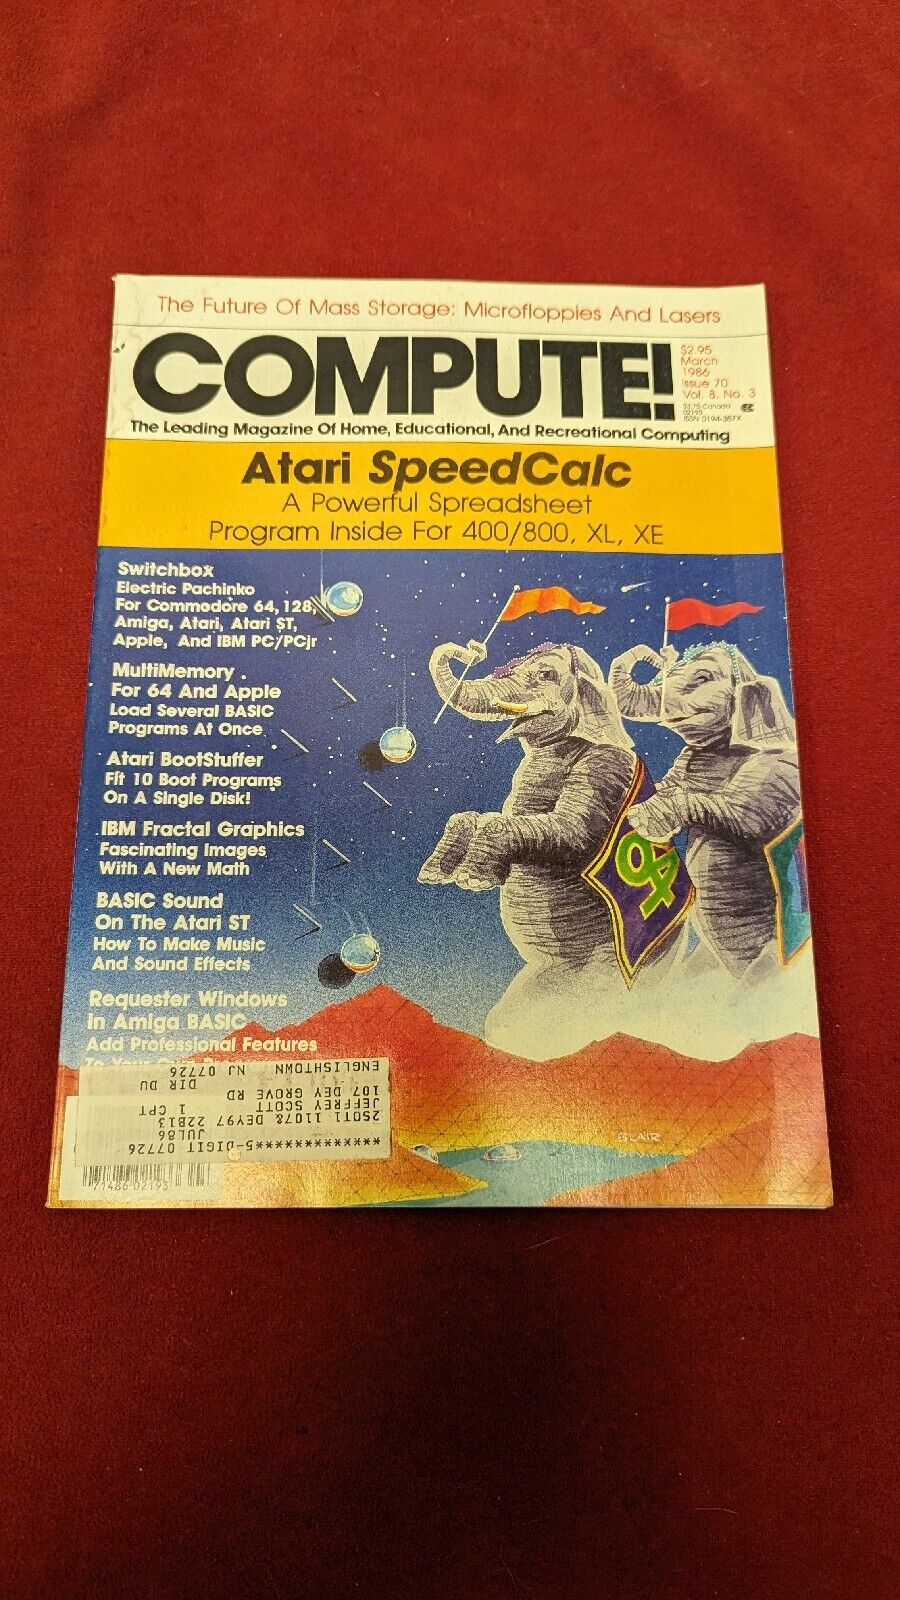 Compute Magazine Vintage Computing March 1986 Issue 70 Vol.8 No. 3